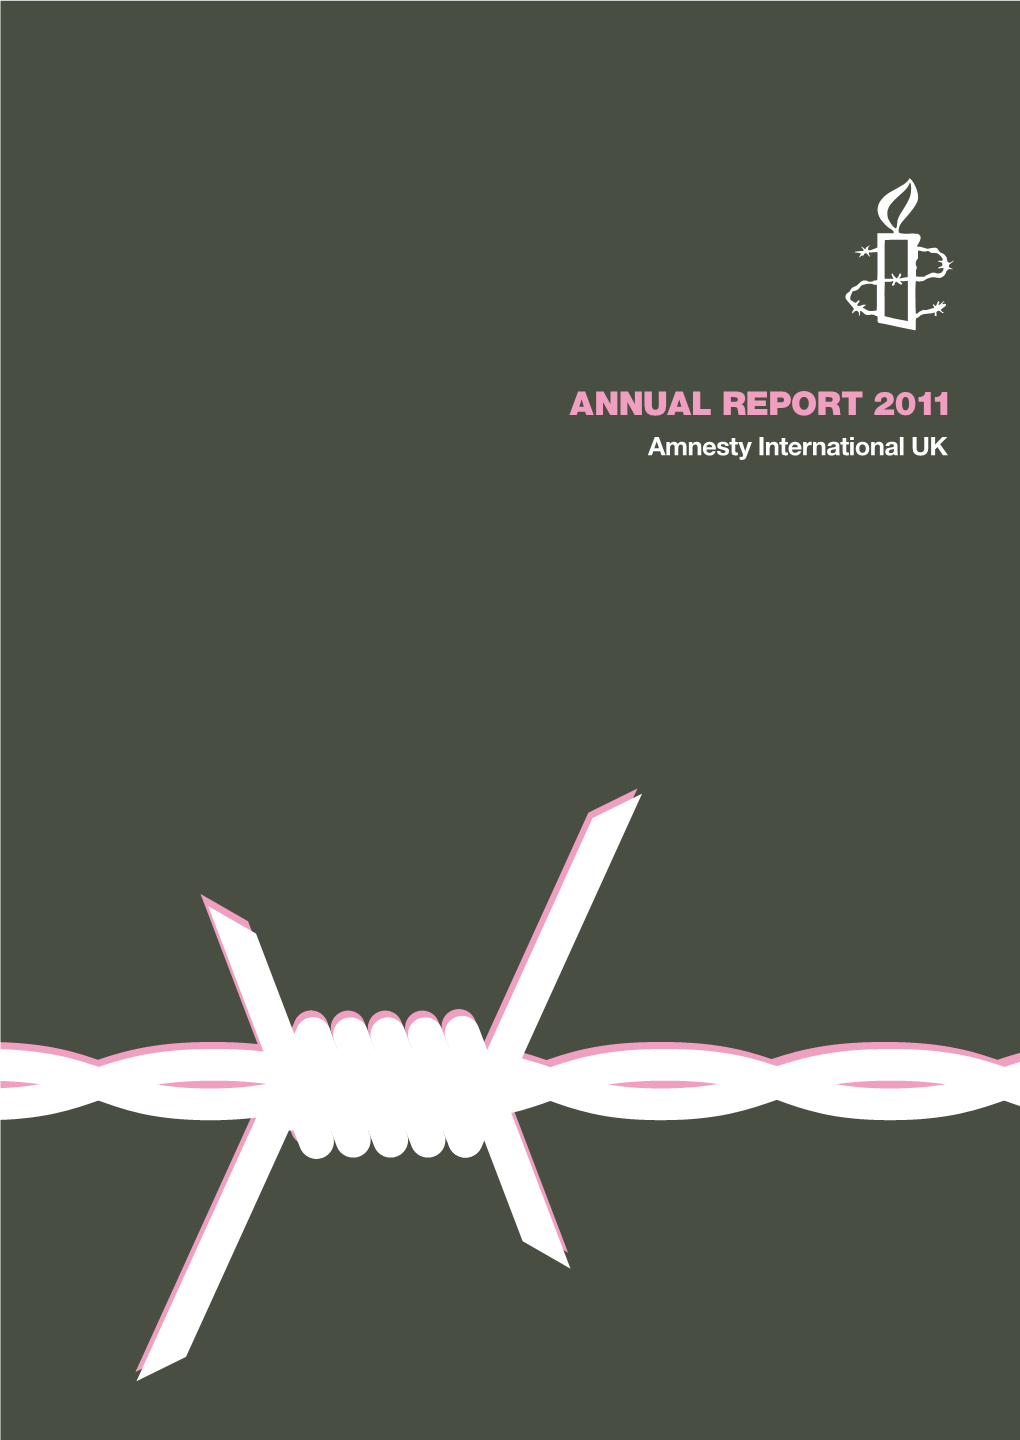 ANNUAL REPORT 2011 the Human Rights Action Centre 17-25 New Inn Yard Amnesty International UK London EC2A 3EA Tel +44 (0) 20 7033 1777 Sct@Amnesty.Org.Uk